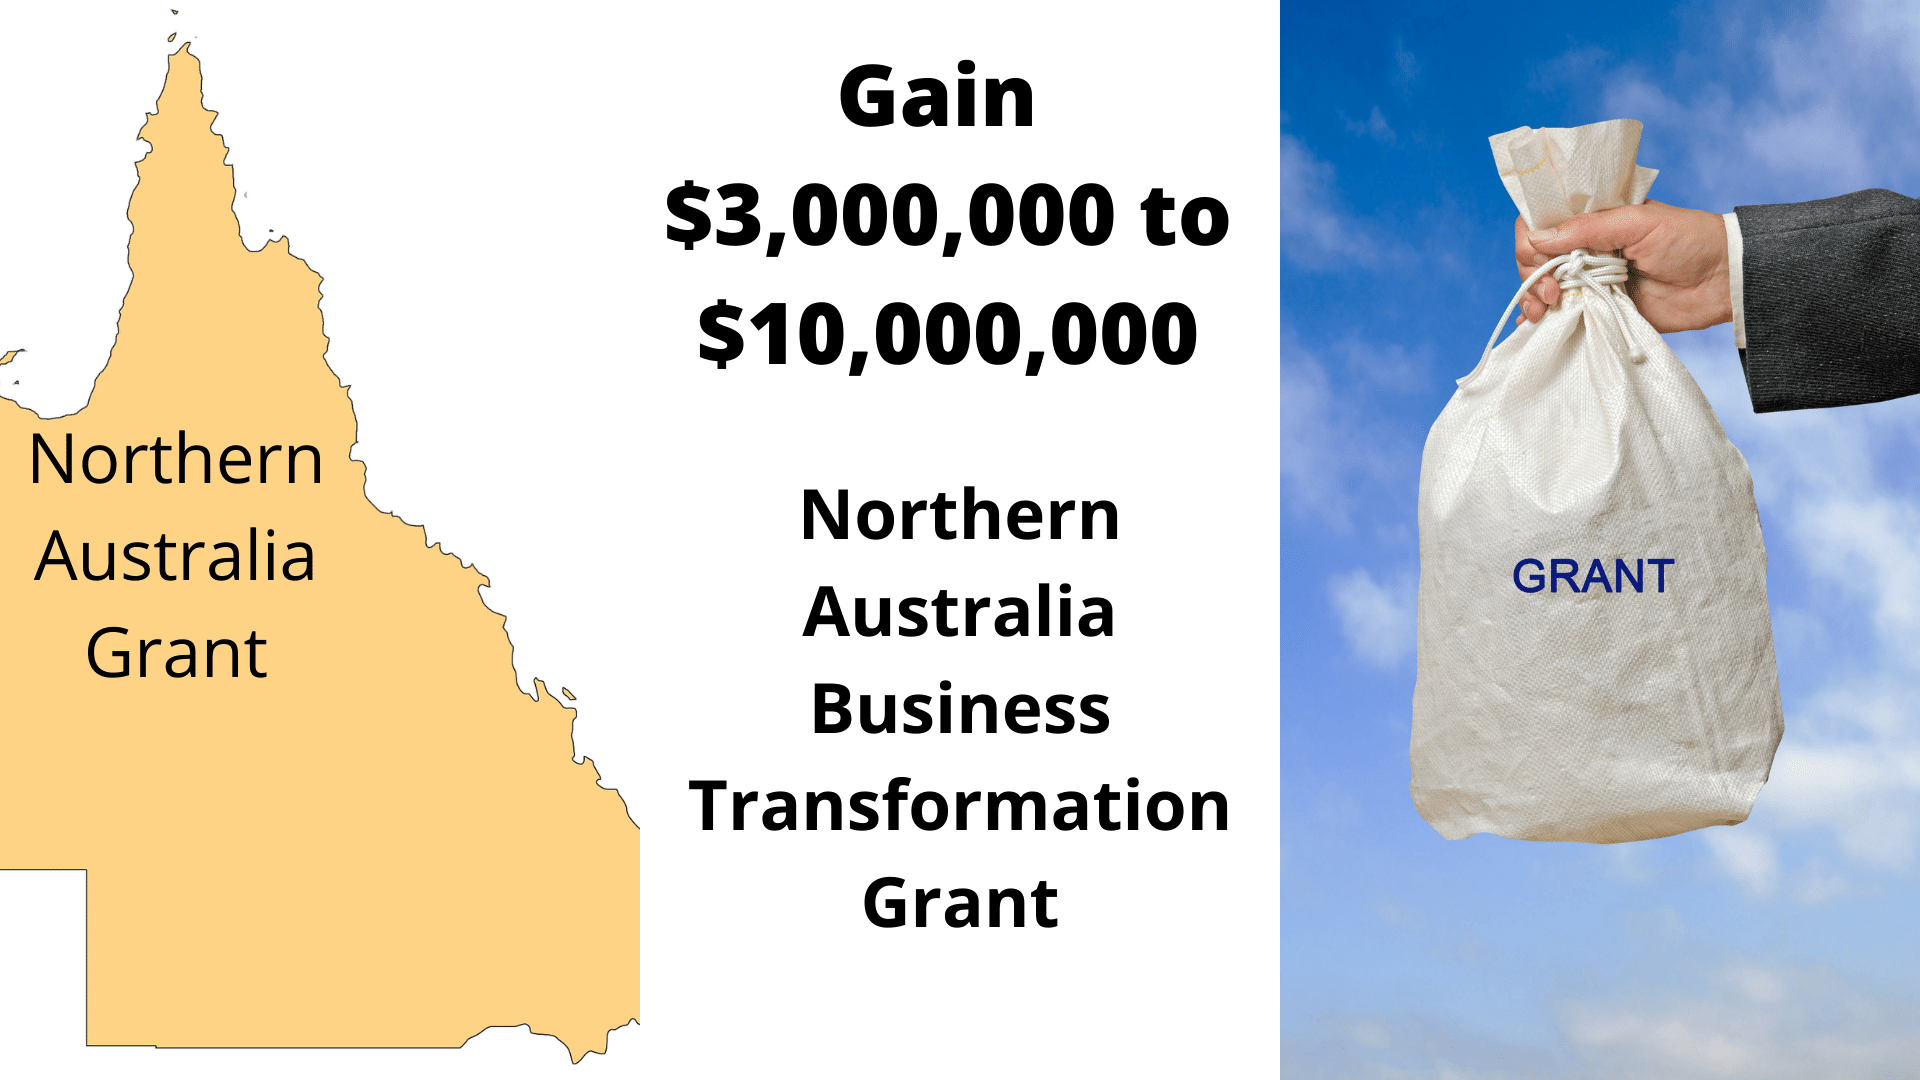 Northern Australia Business Development Transformation Grant